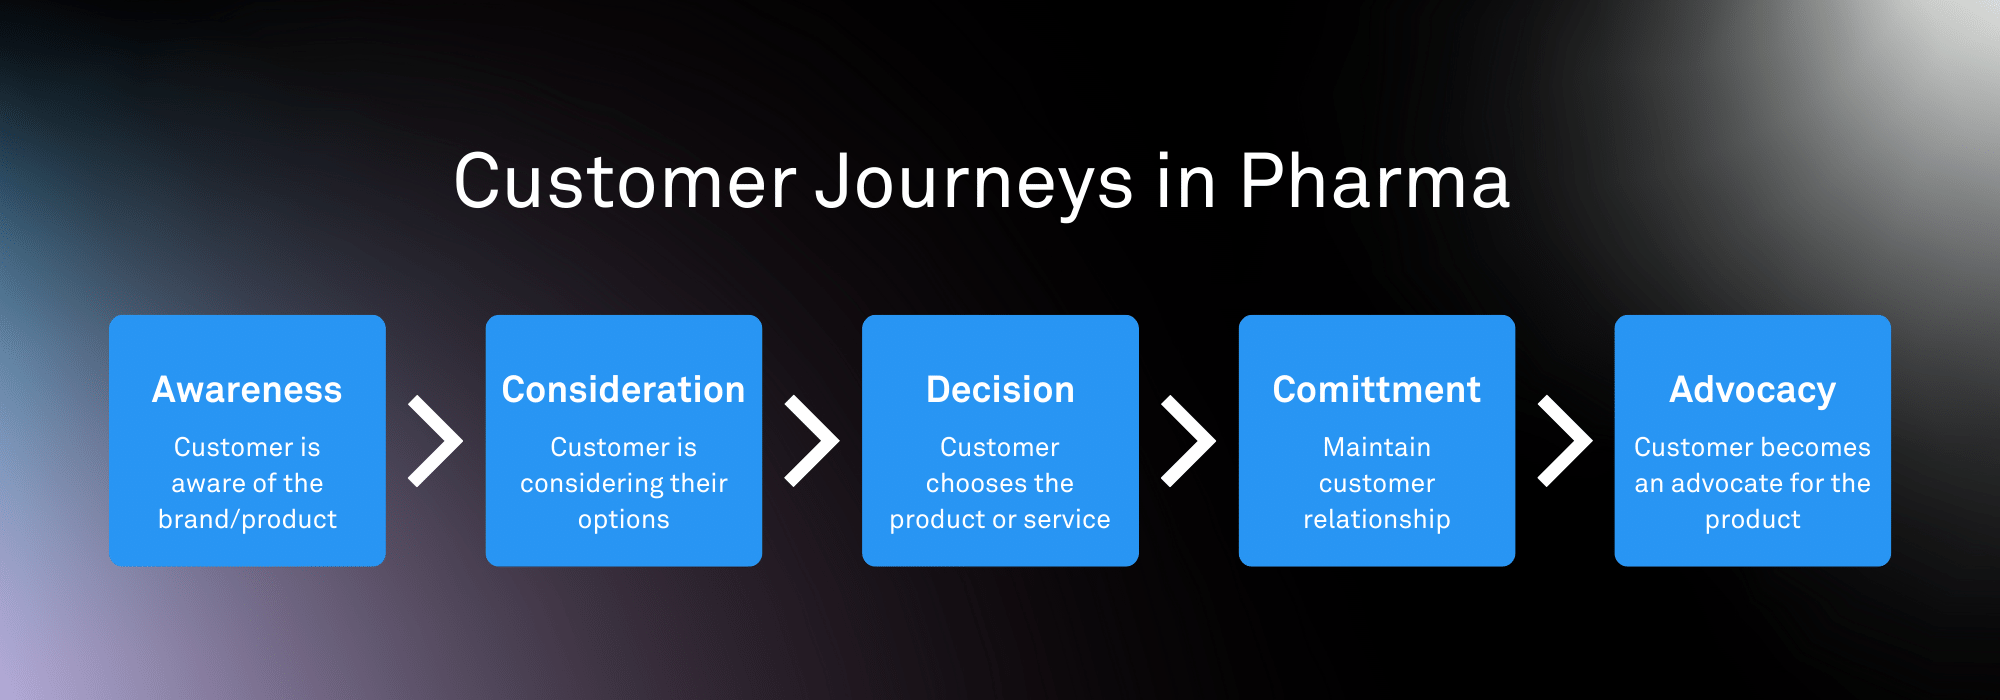 Graphic Showing Customer Journeys in Pharma